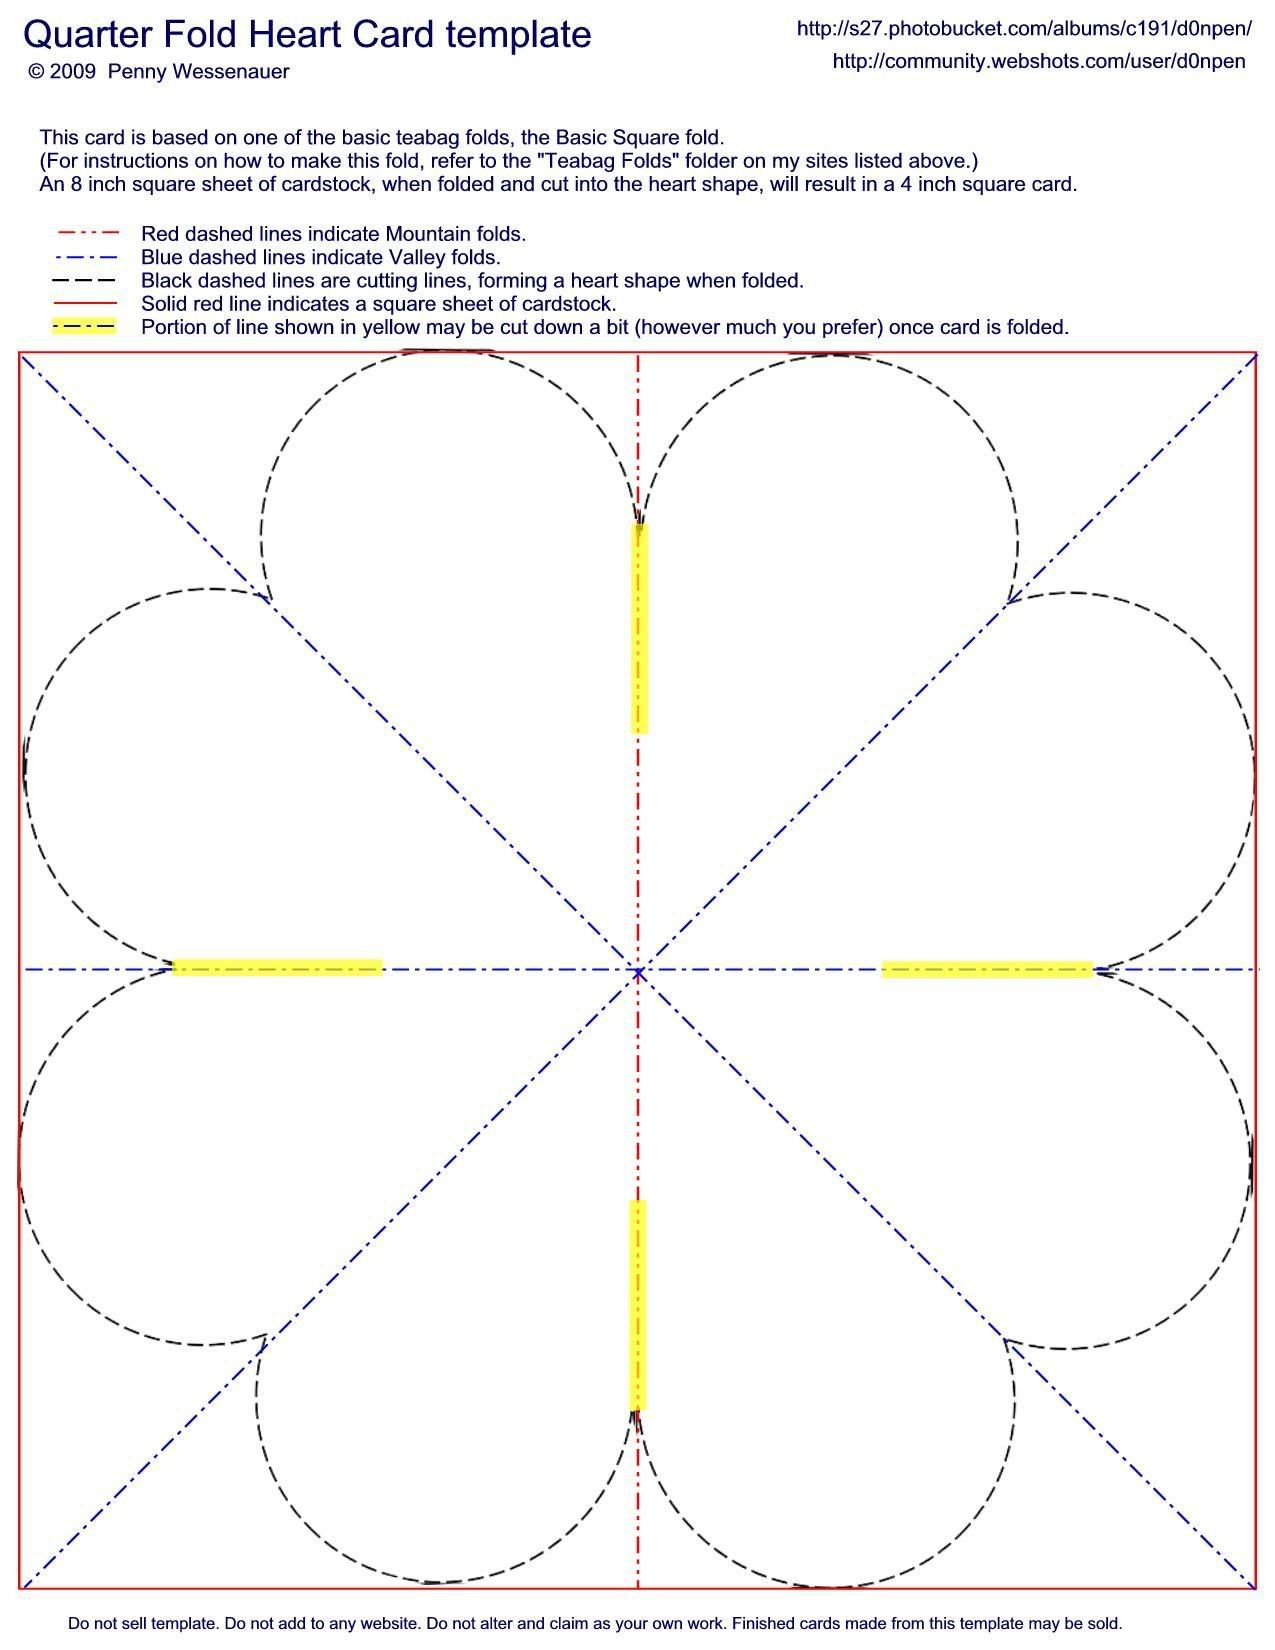 Quarter Fold Heart Card Template | Valentines | Heart Cards With Quarter Fold Card Template